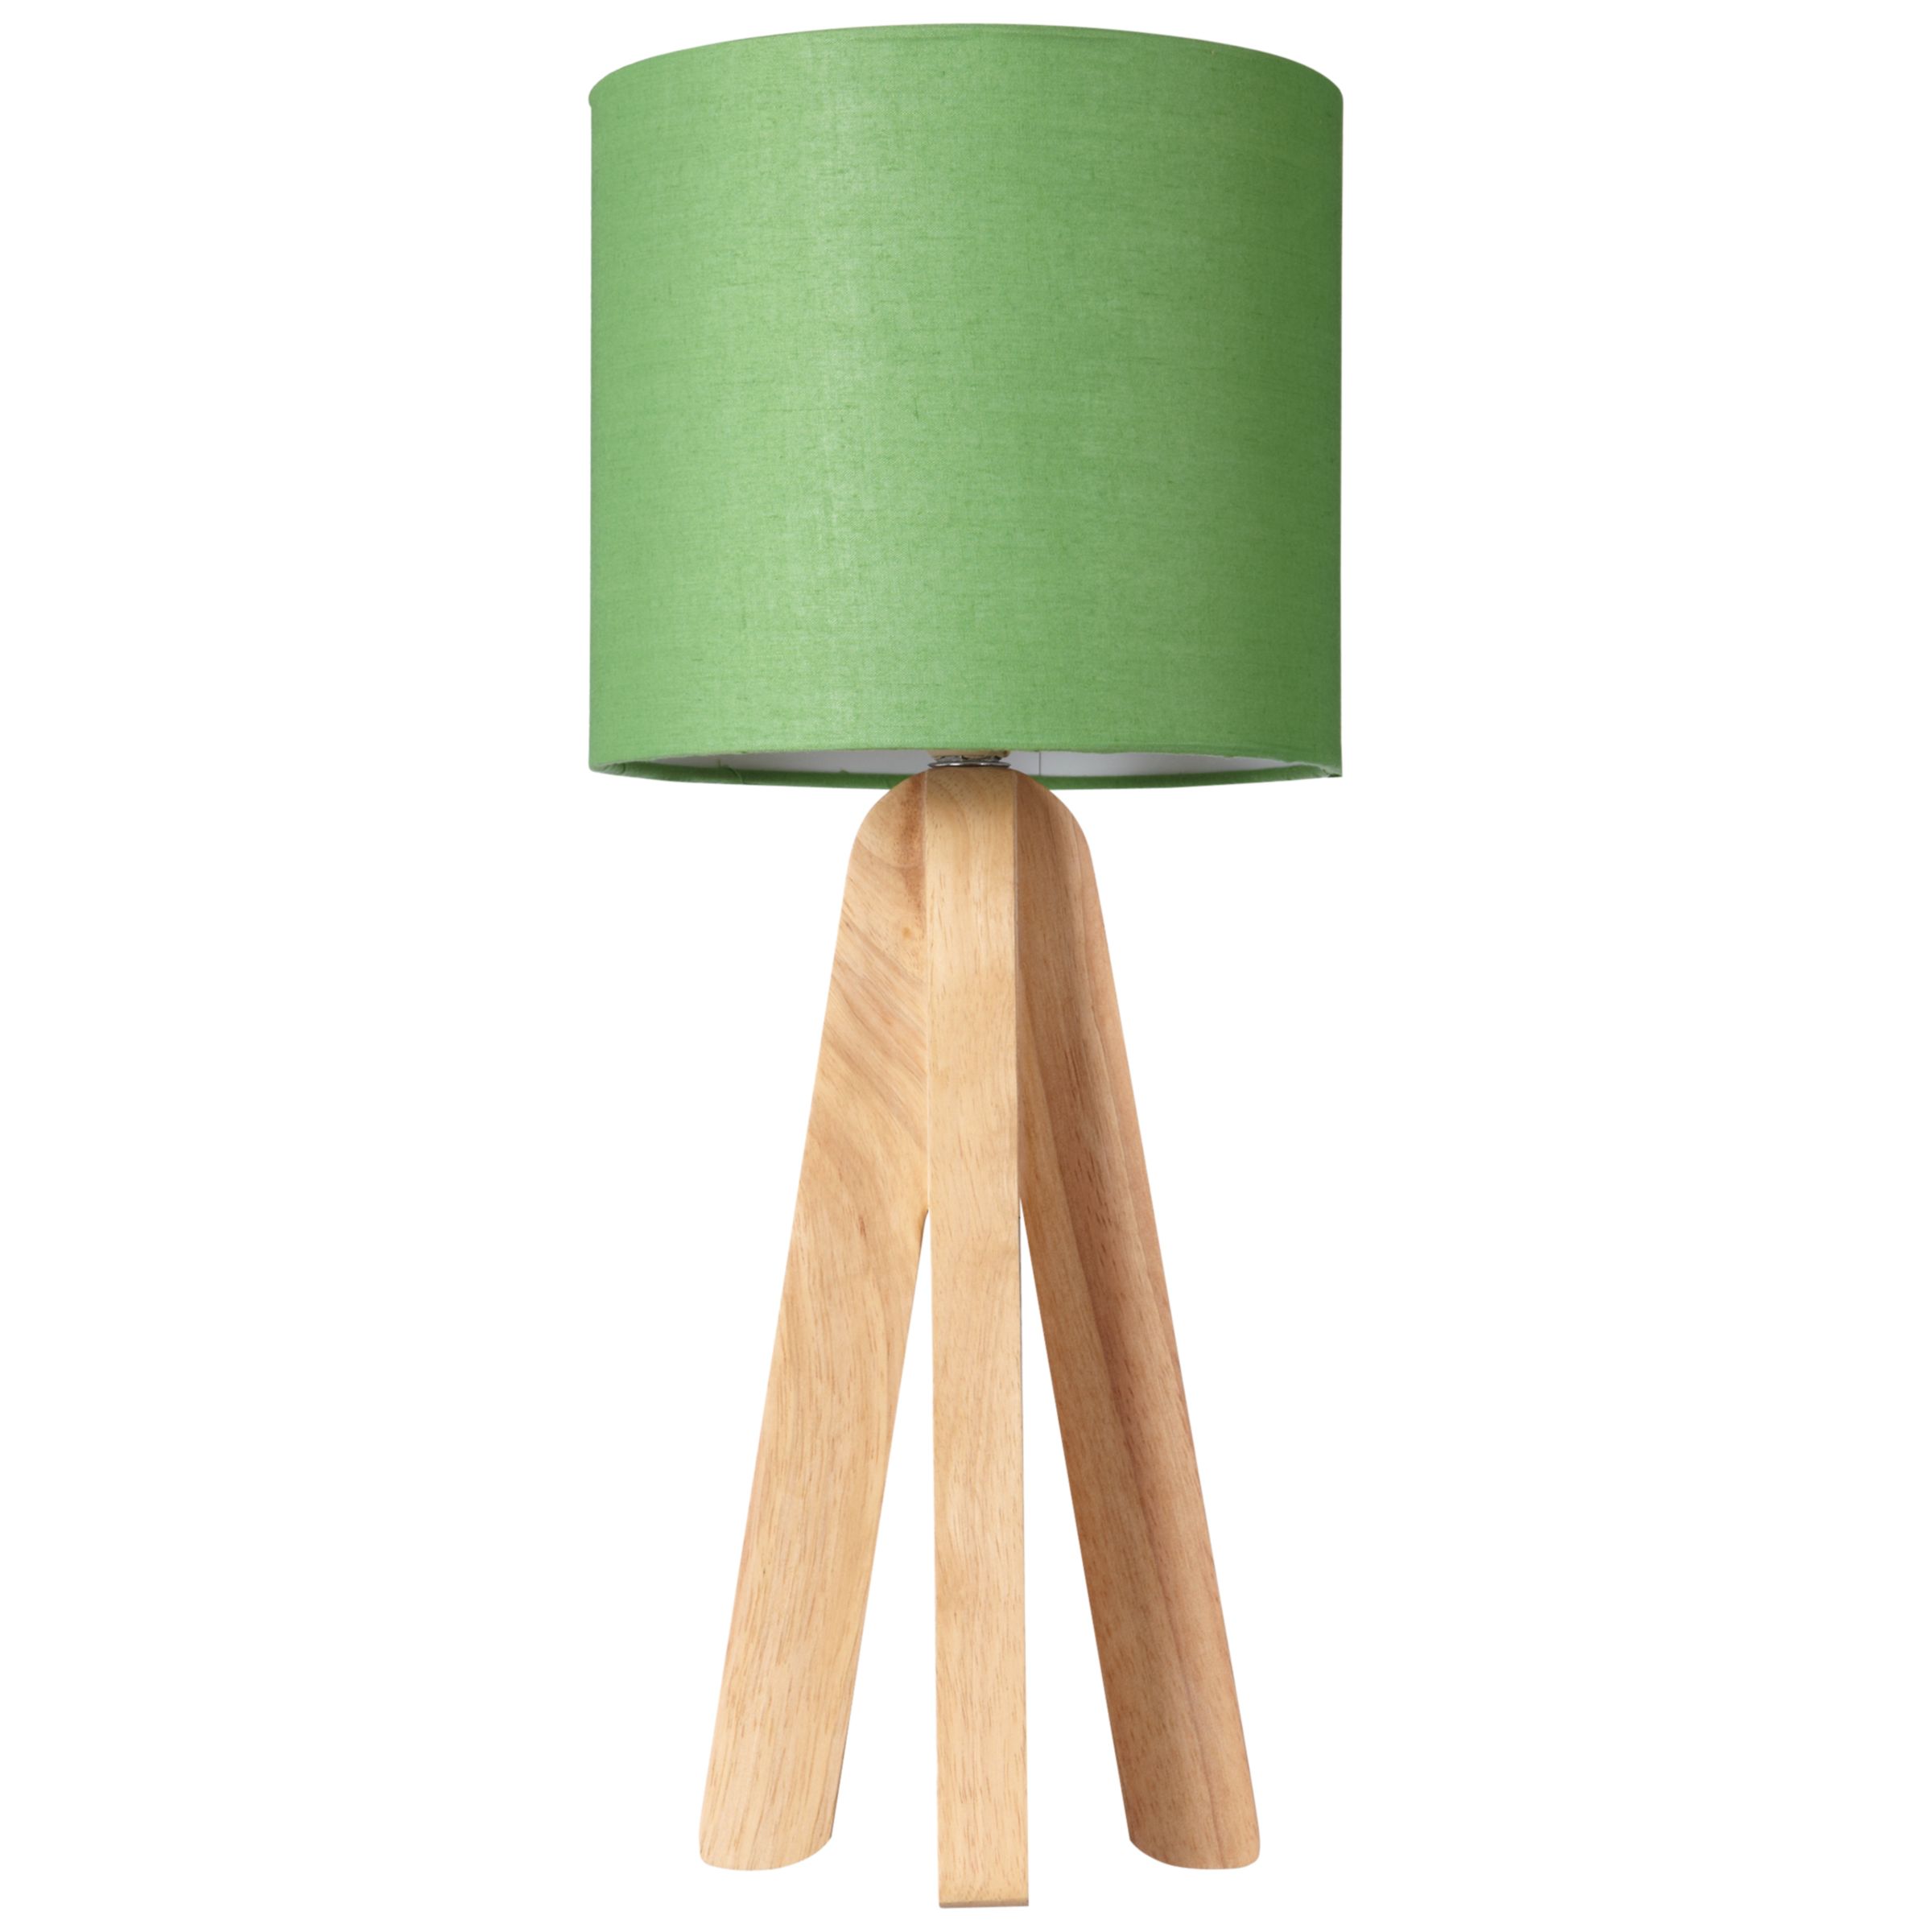 John Lewis Kylie Table Lamp, Green